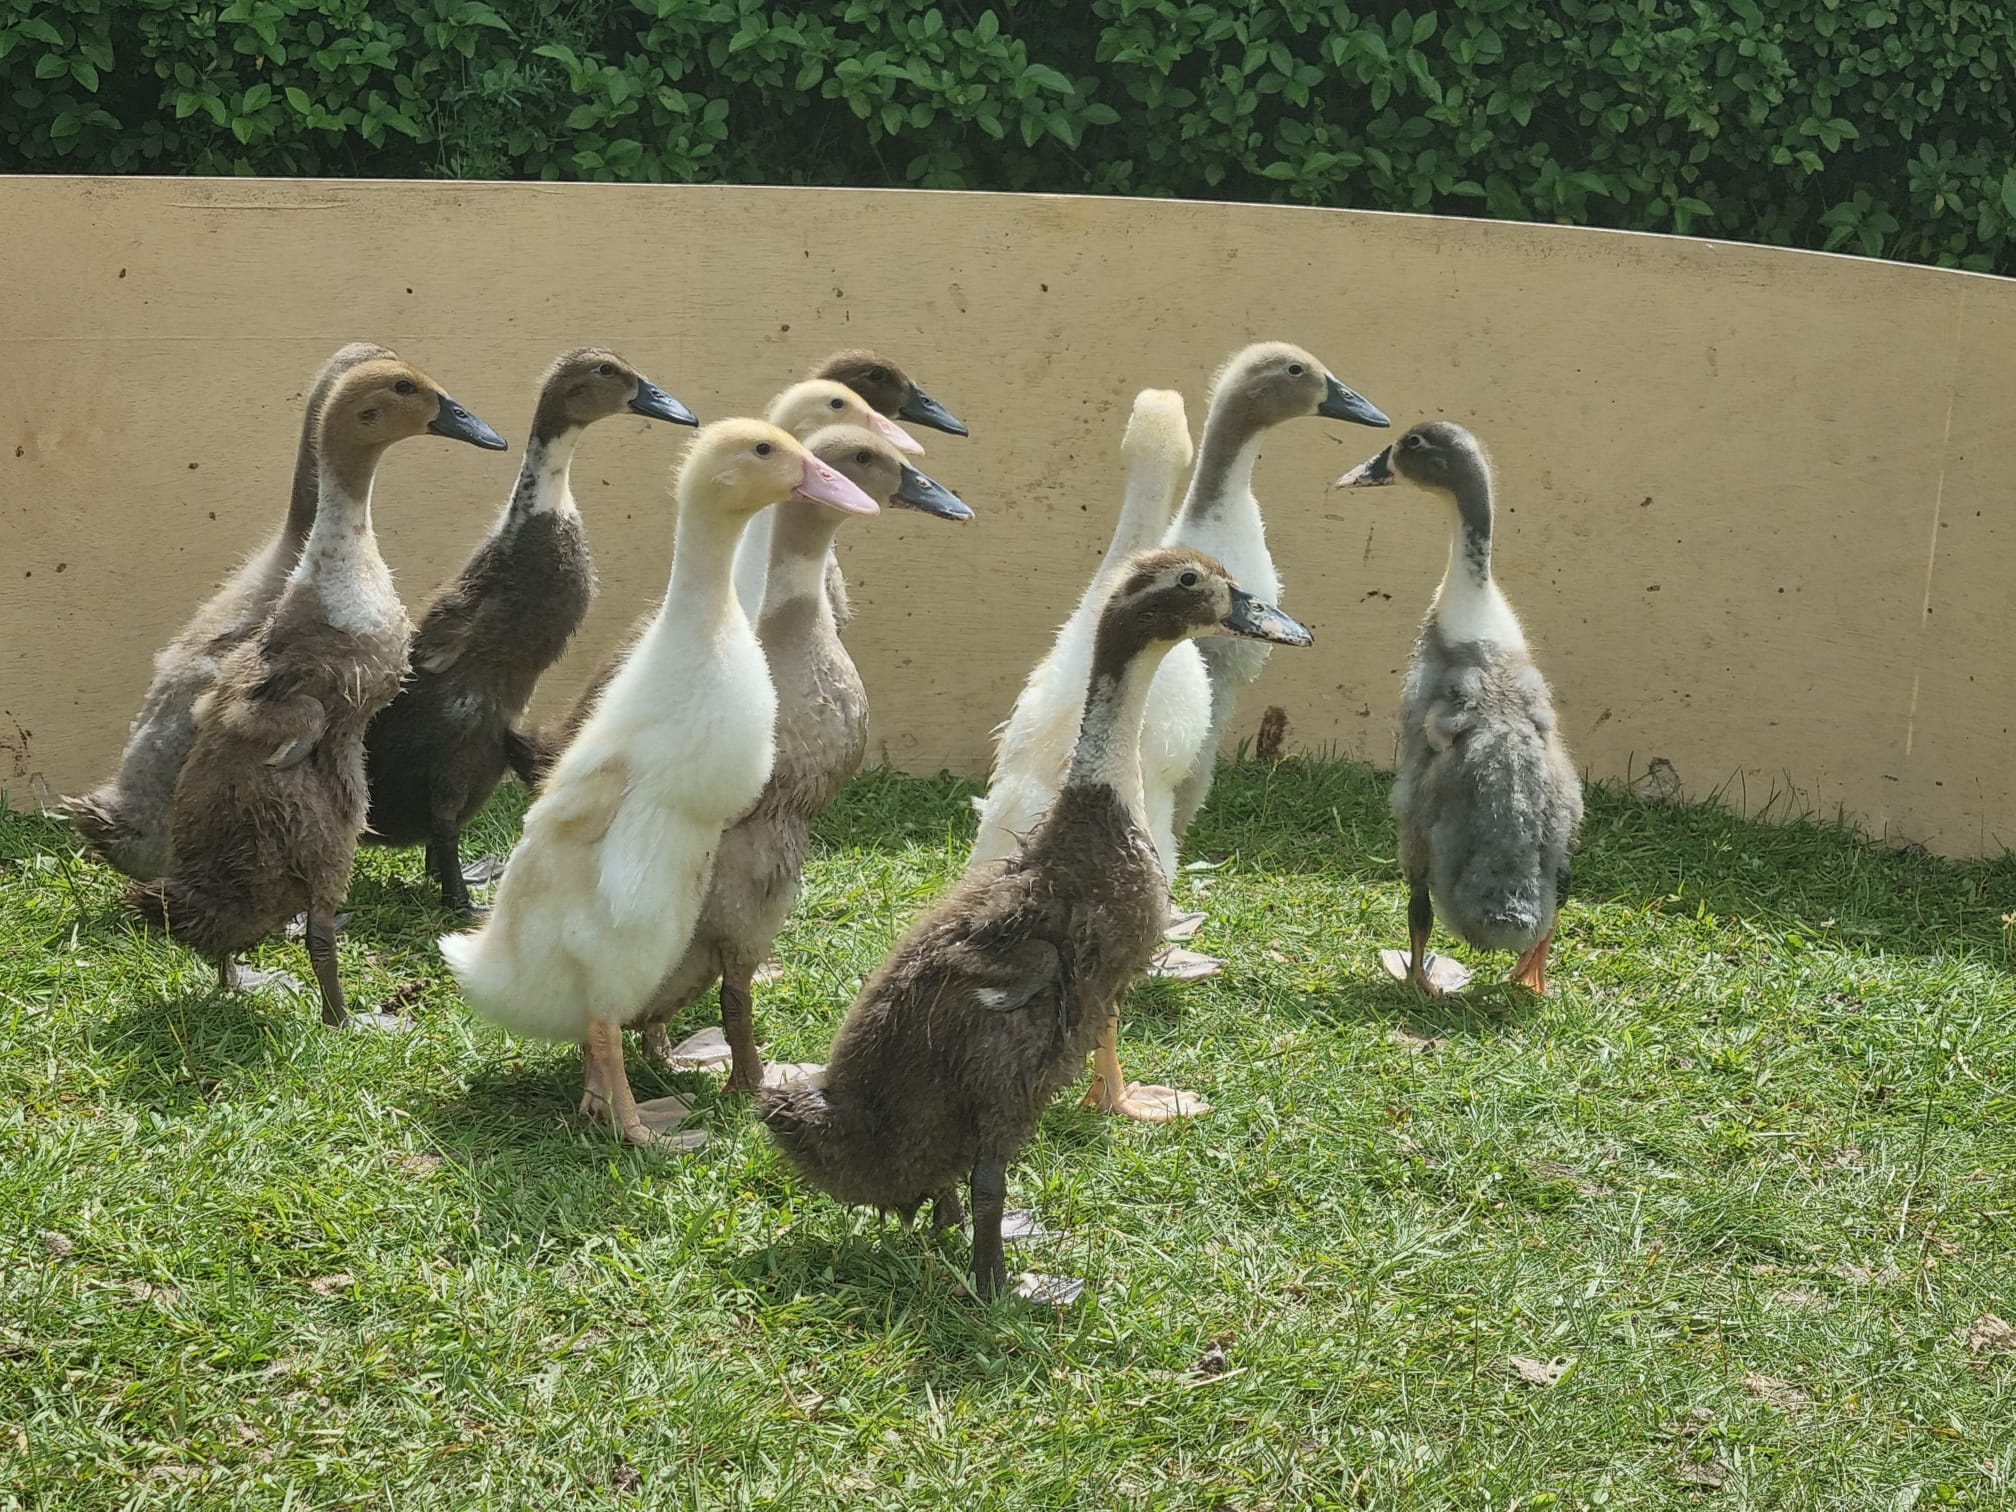 ducks in their enclosure